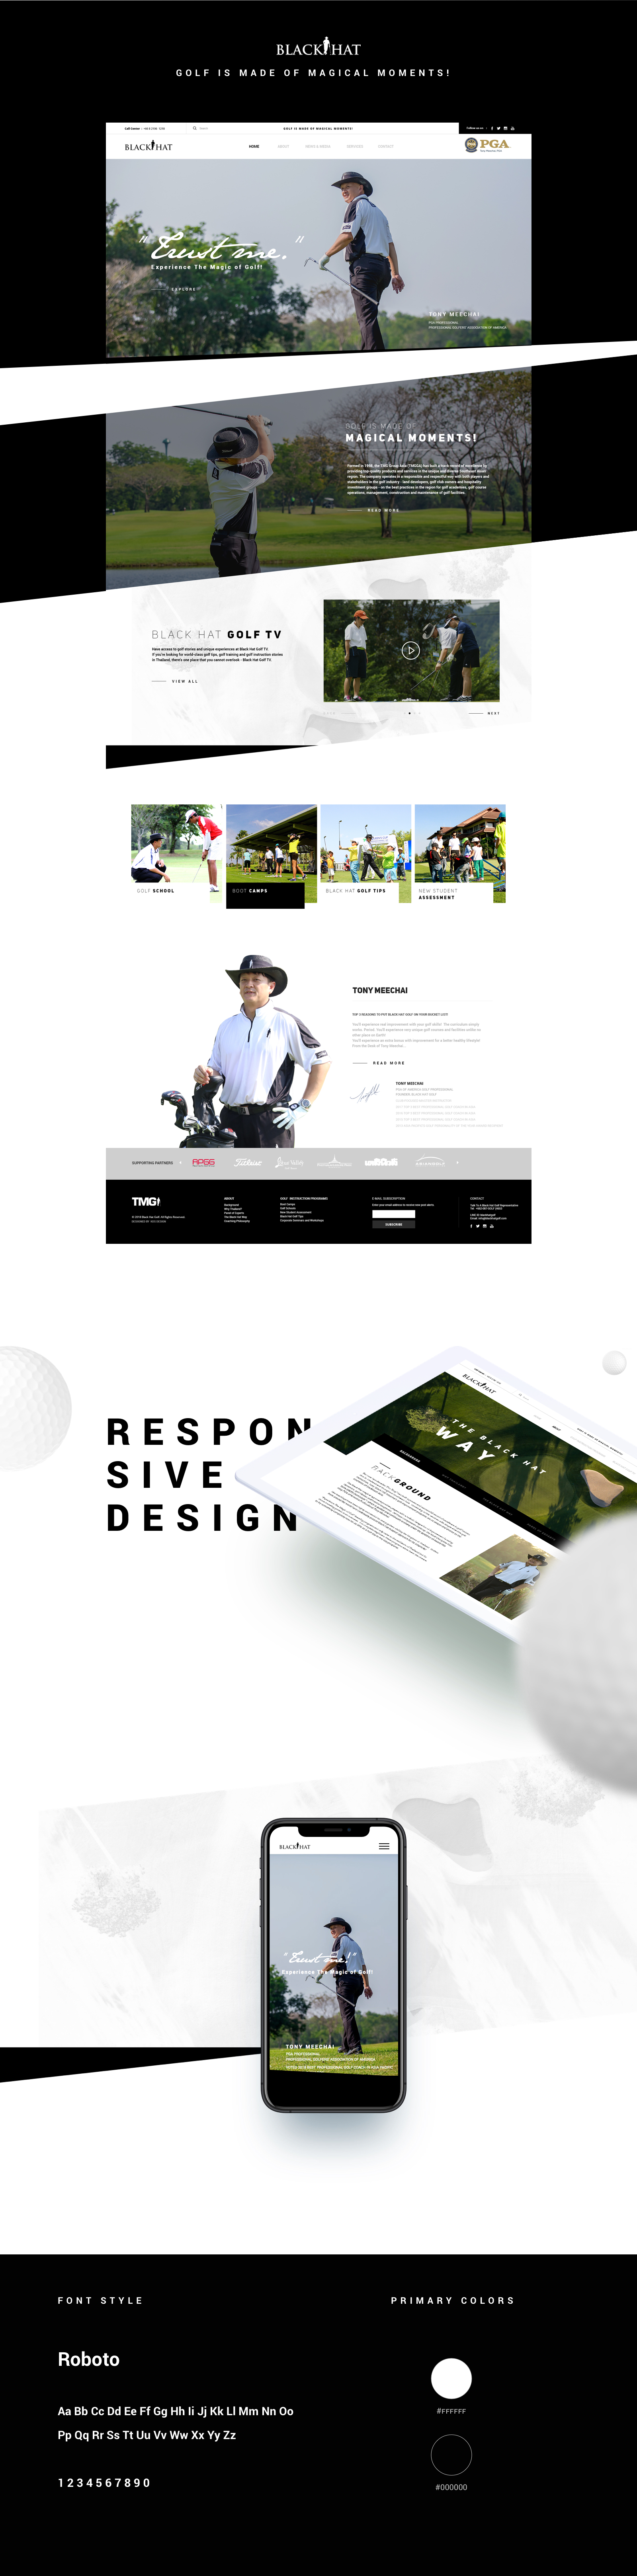 KOS Design - Black Hat Golf